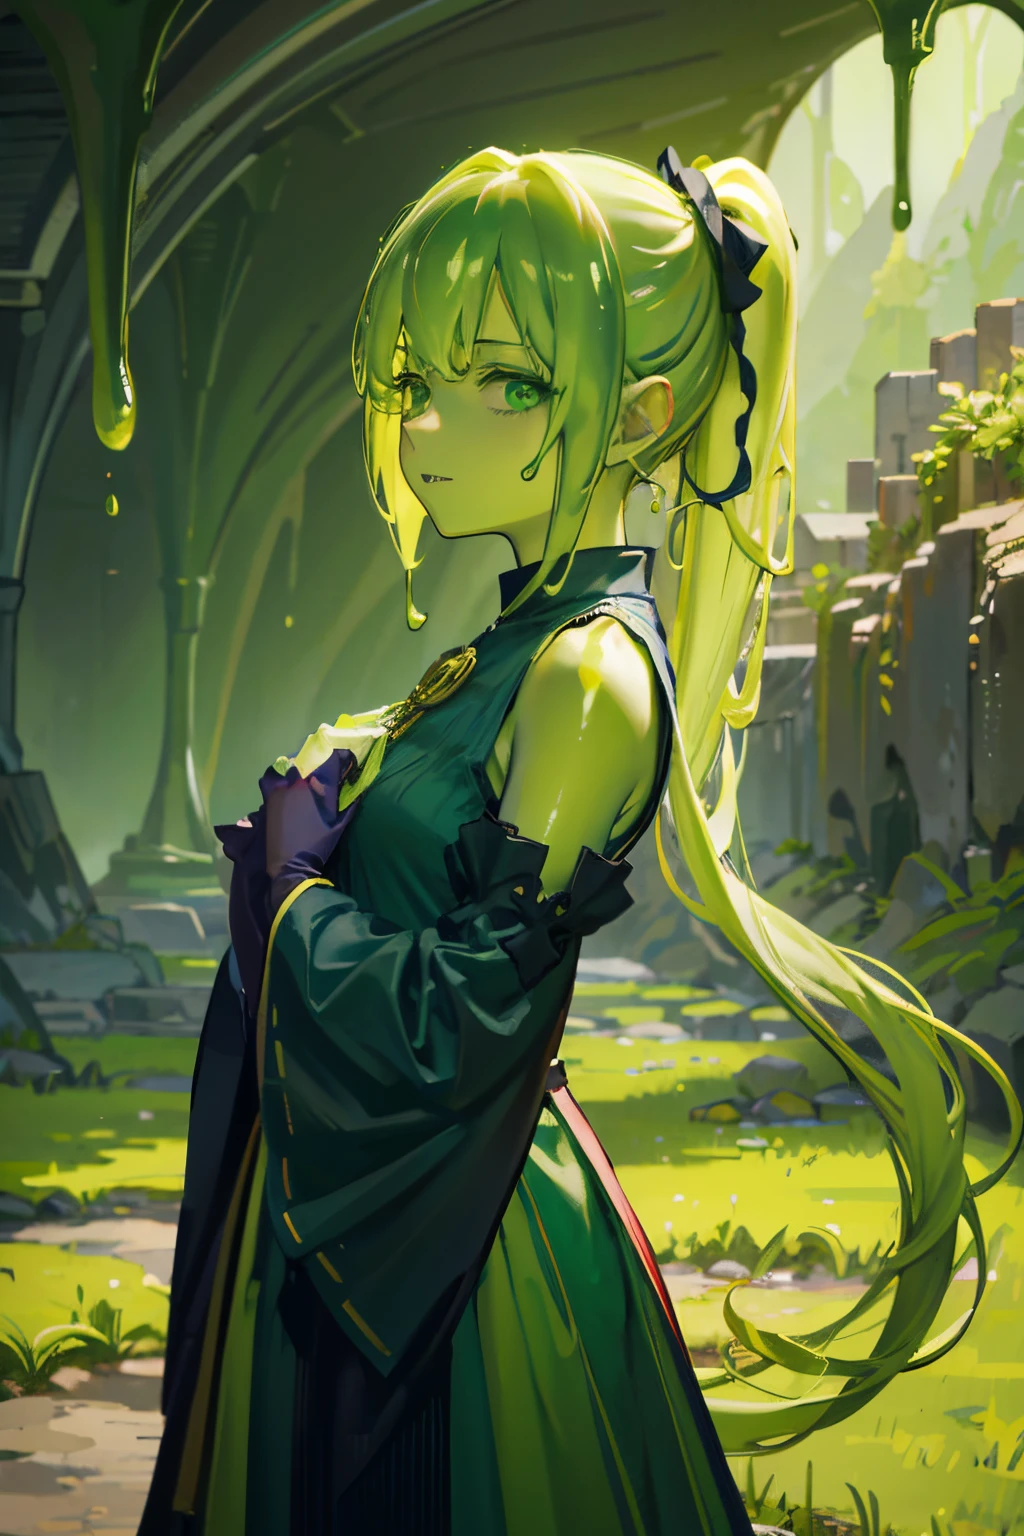 A 녹색 slime girl, 더블 포니테일 헤어, 녹색 skin, 녹색, 동굴 배경, 중세 옷, 괴물 소녀, 행복한 표정, 텅 빈 눈,